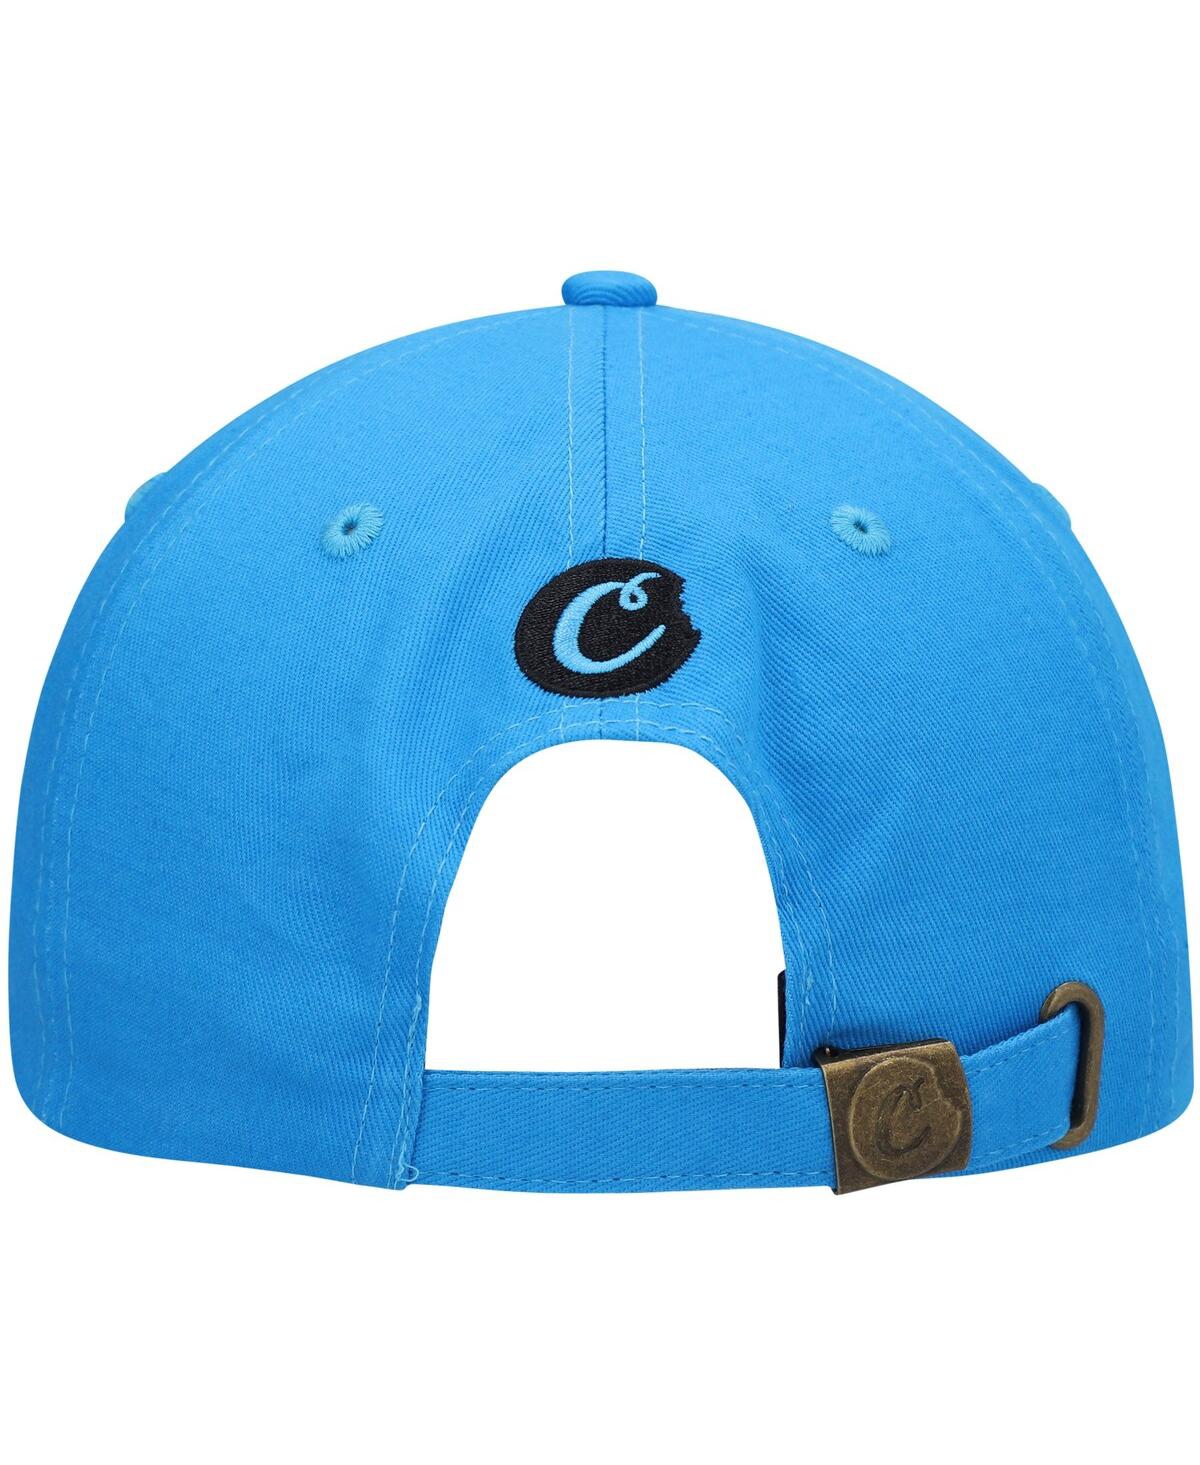 Shop Cookies Men's  Blue Original Mint Solid Dad Adjustable Hat